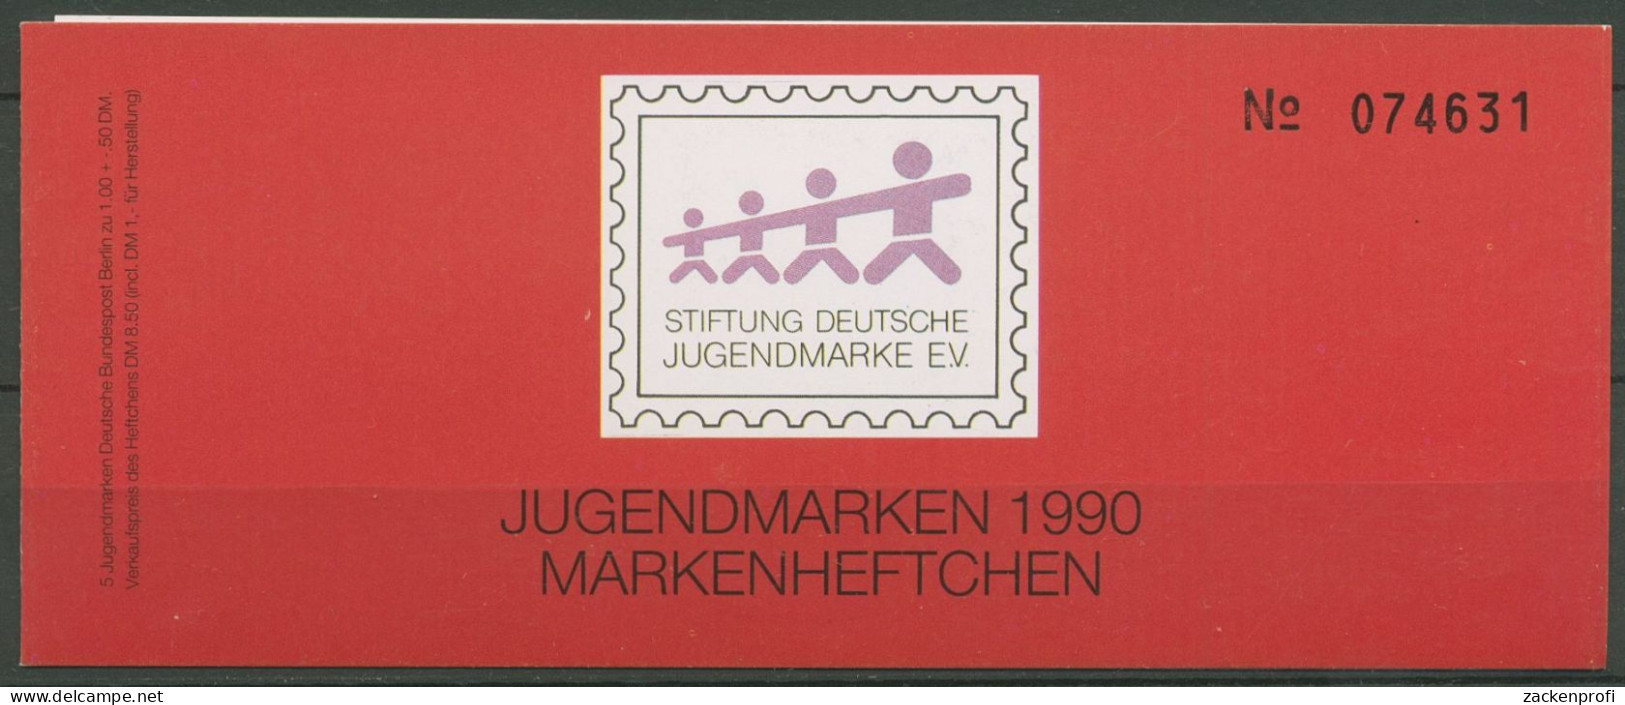 Berlin Jugendmarke 1990 Max & Moritz Markenheftchen 871 MH Postfrisch (C60184) - Cuadernillos